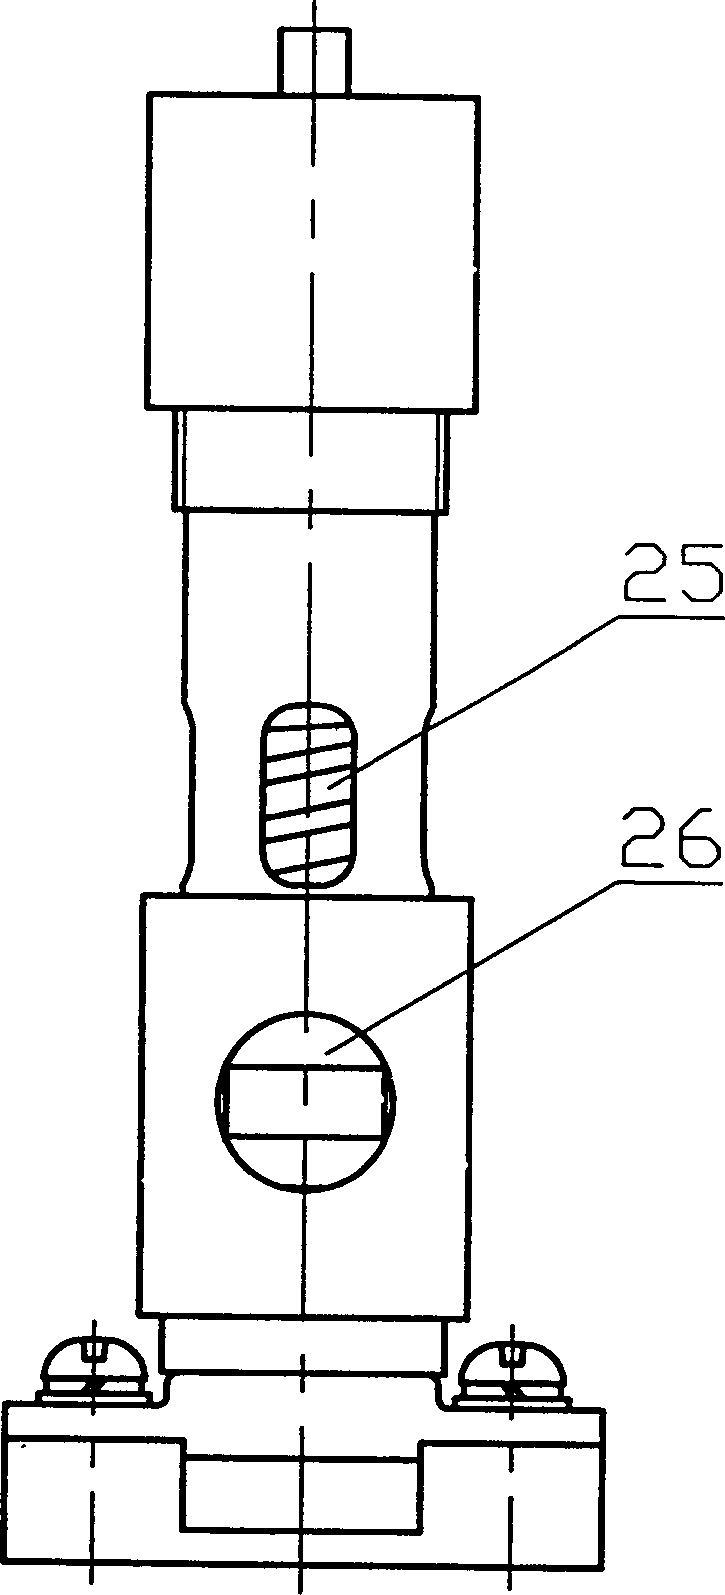 Temperature-sensitive driver of door closing apparatus